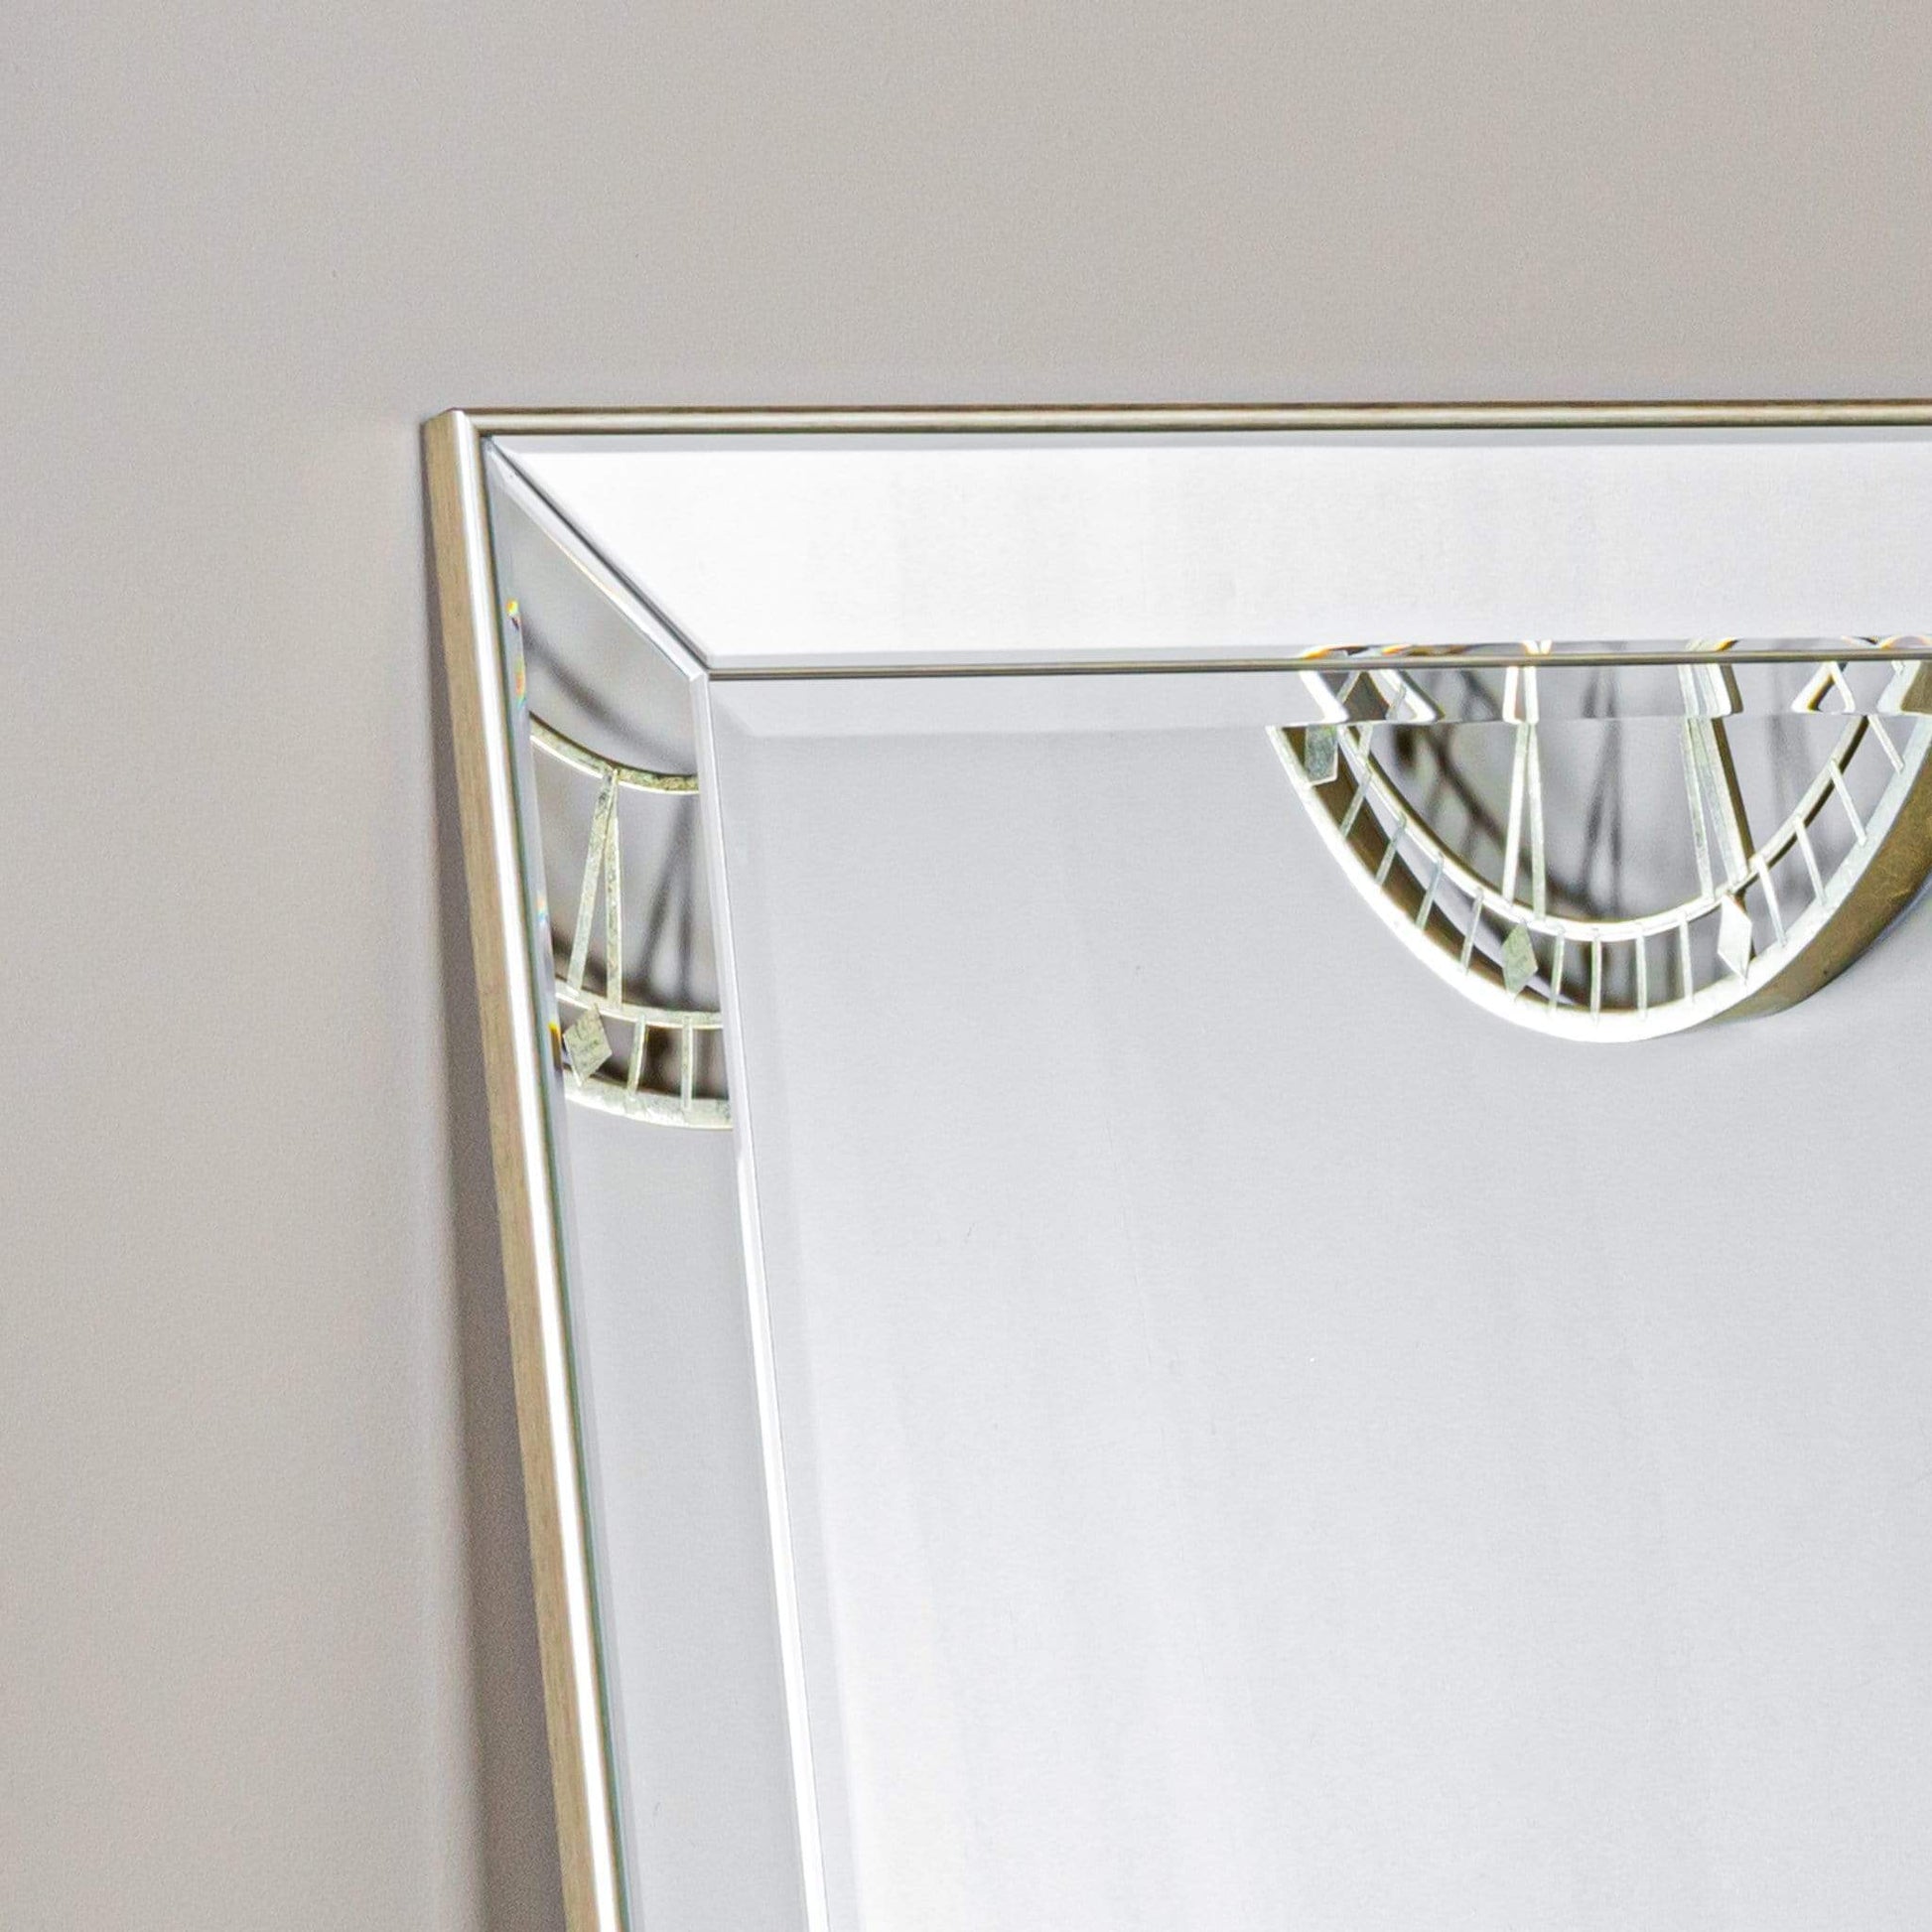 Mirrors  -  Gallery Baskin Leaner Mirror - 469583  -  50108035